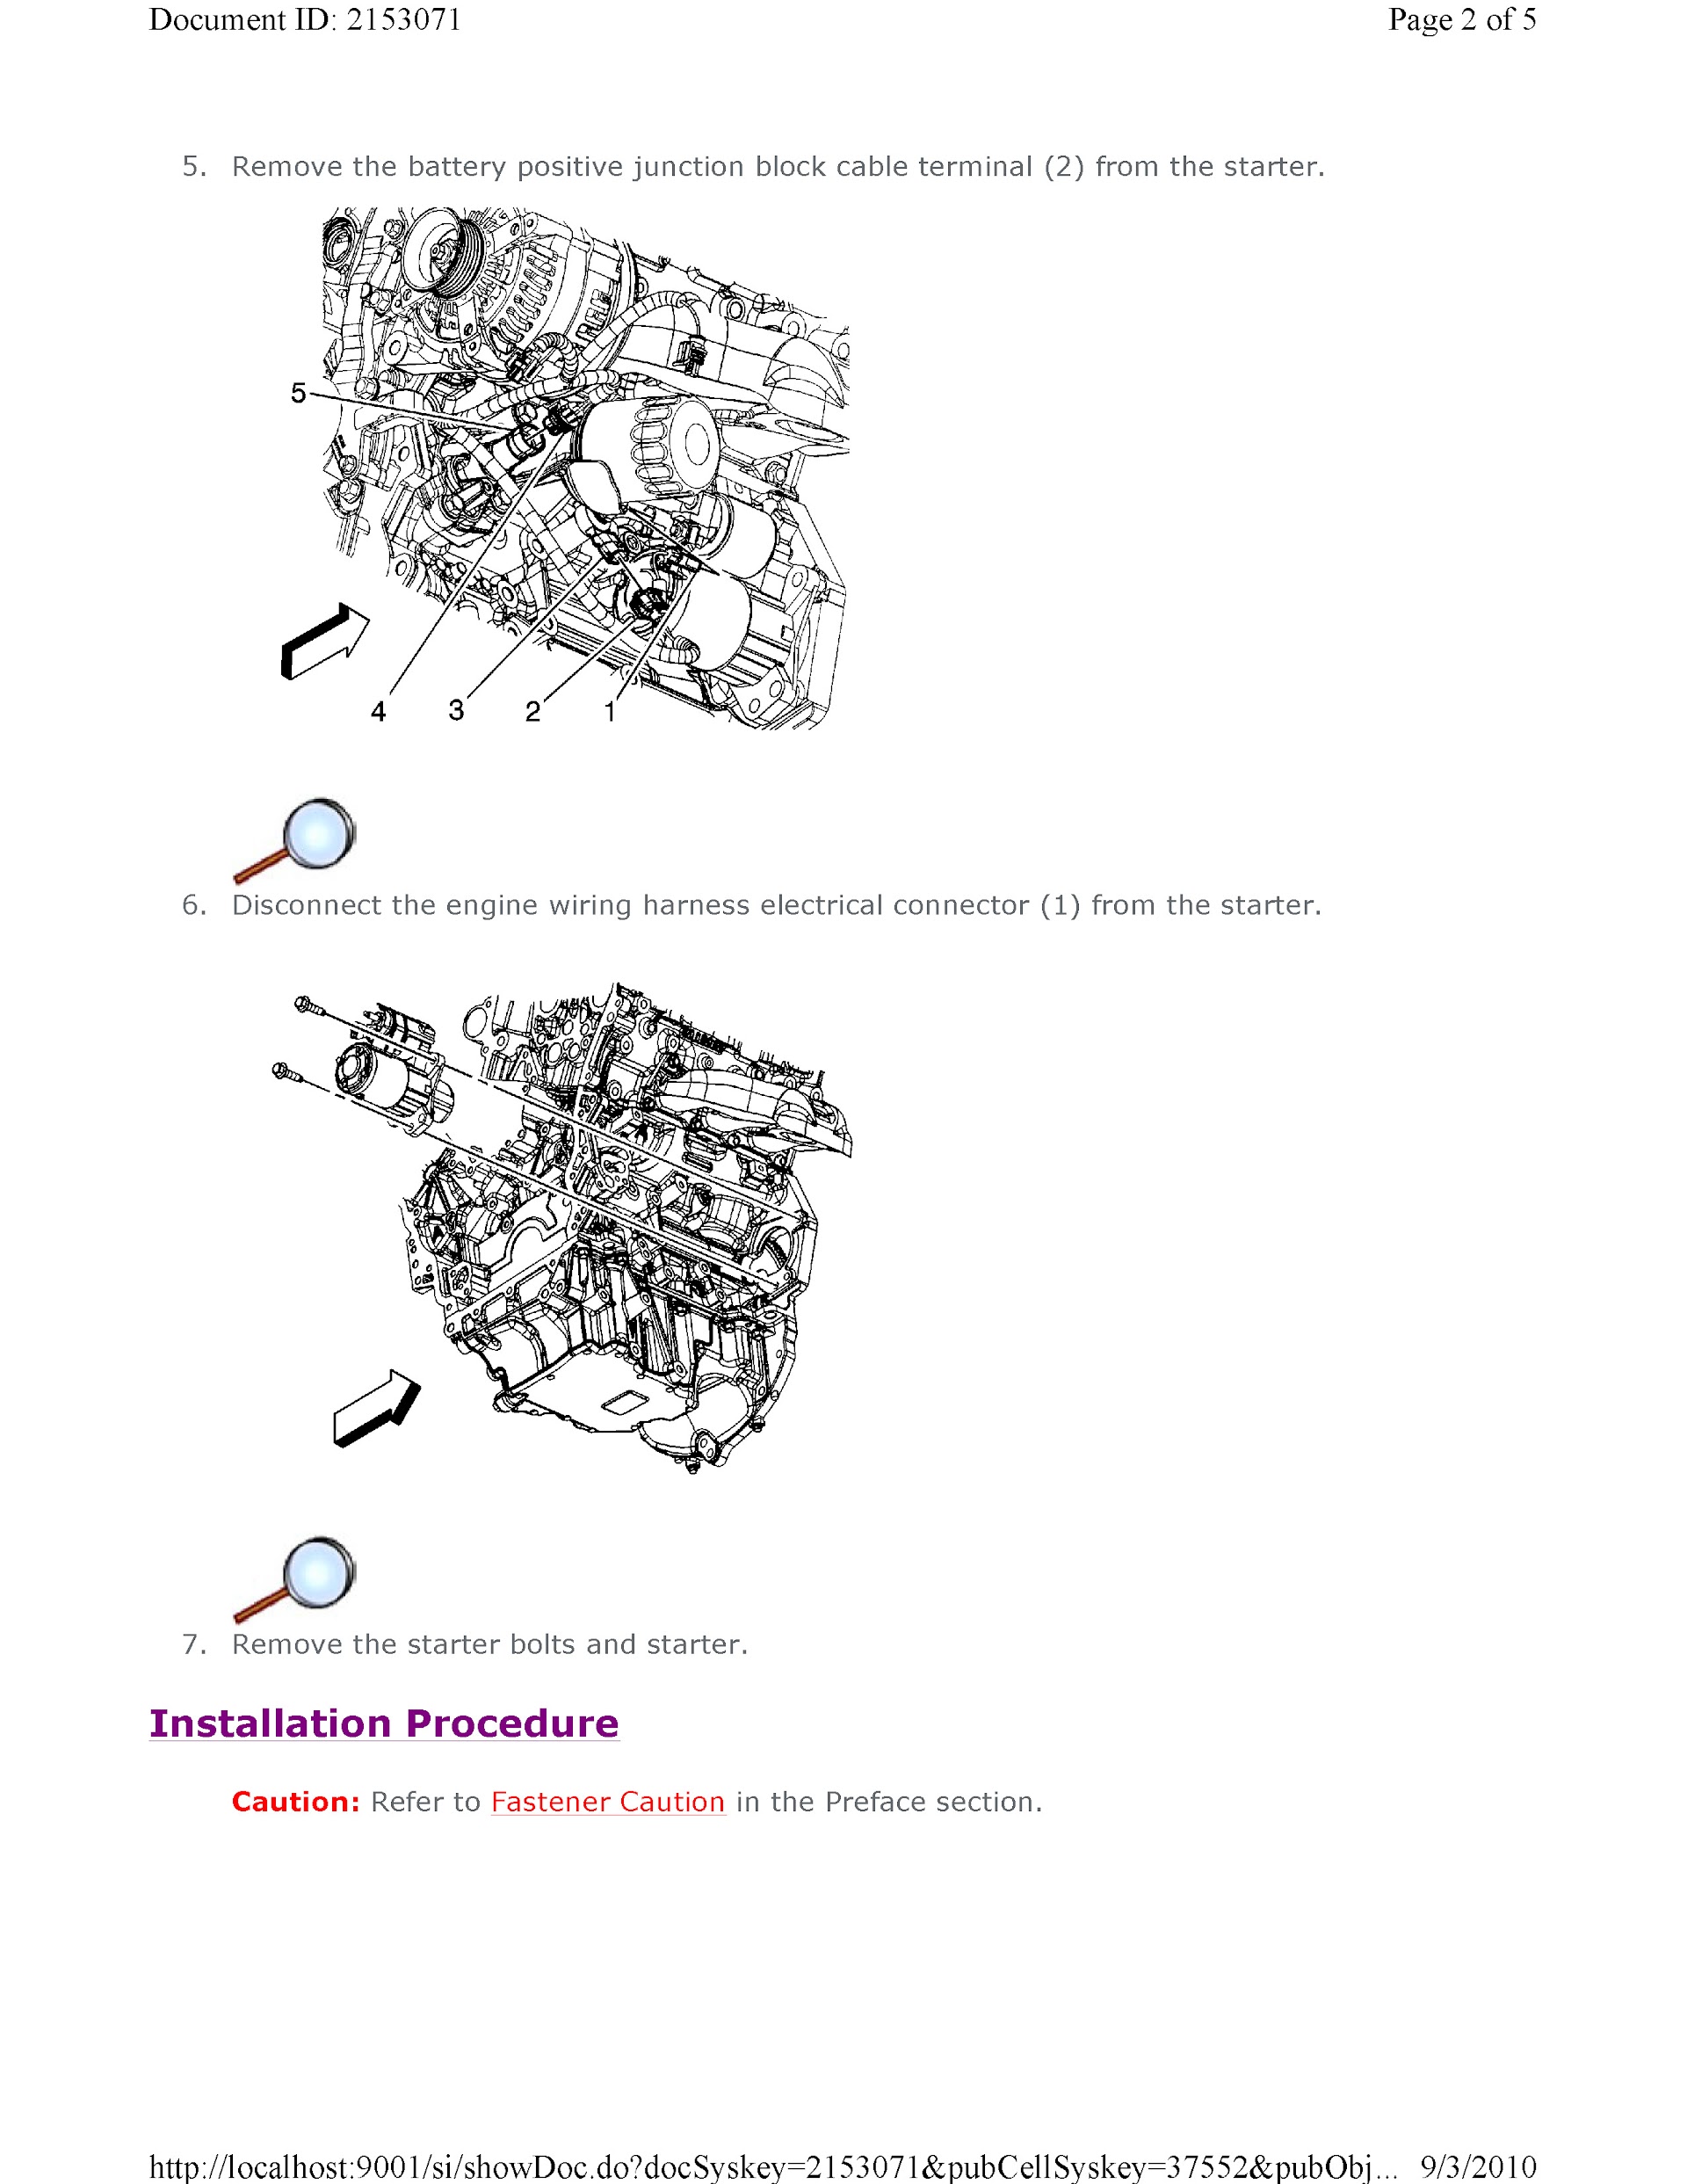 CONTENTS: 2009-2010 Chevrolet Traverse Repair Manual, Engine Mechanical